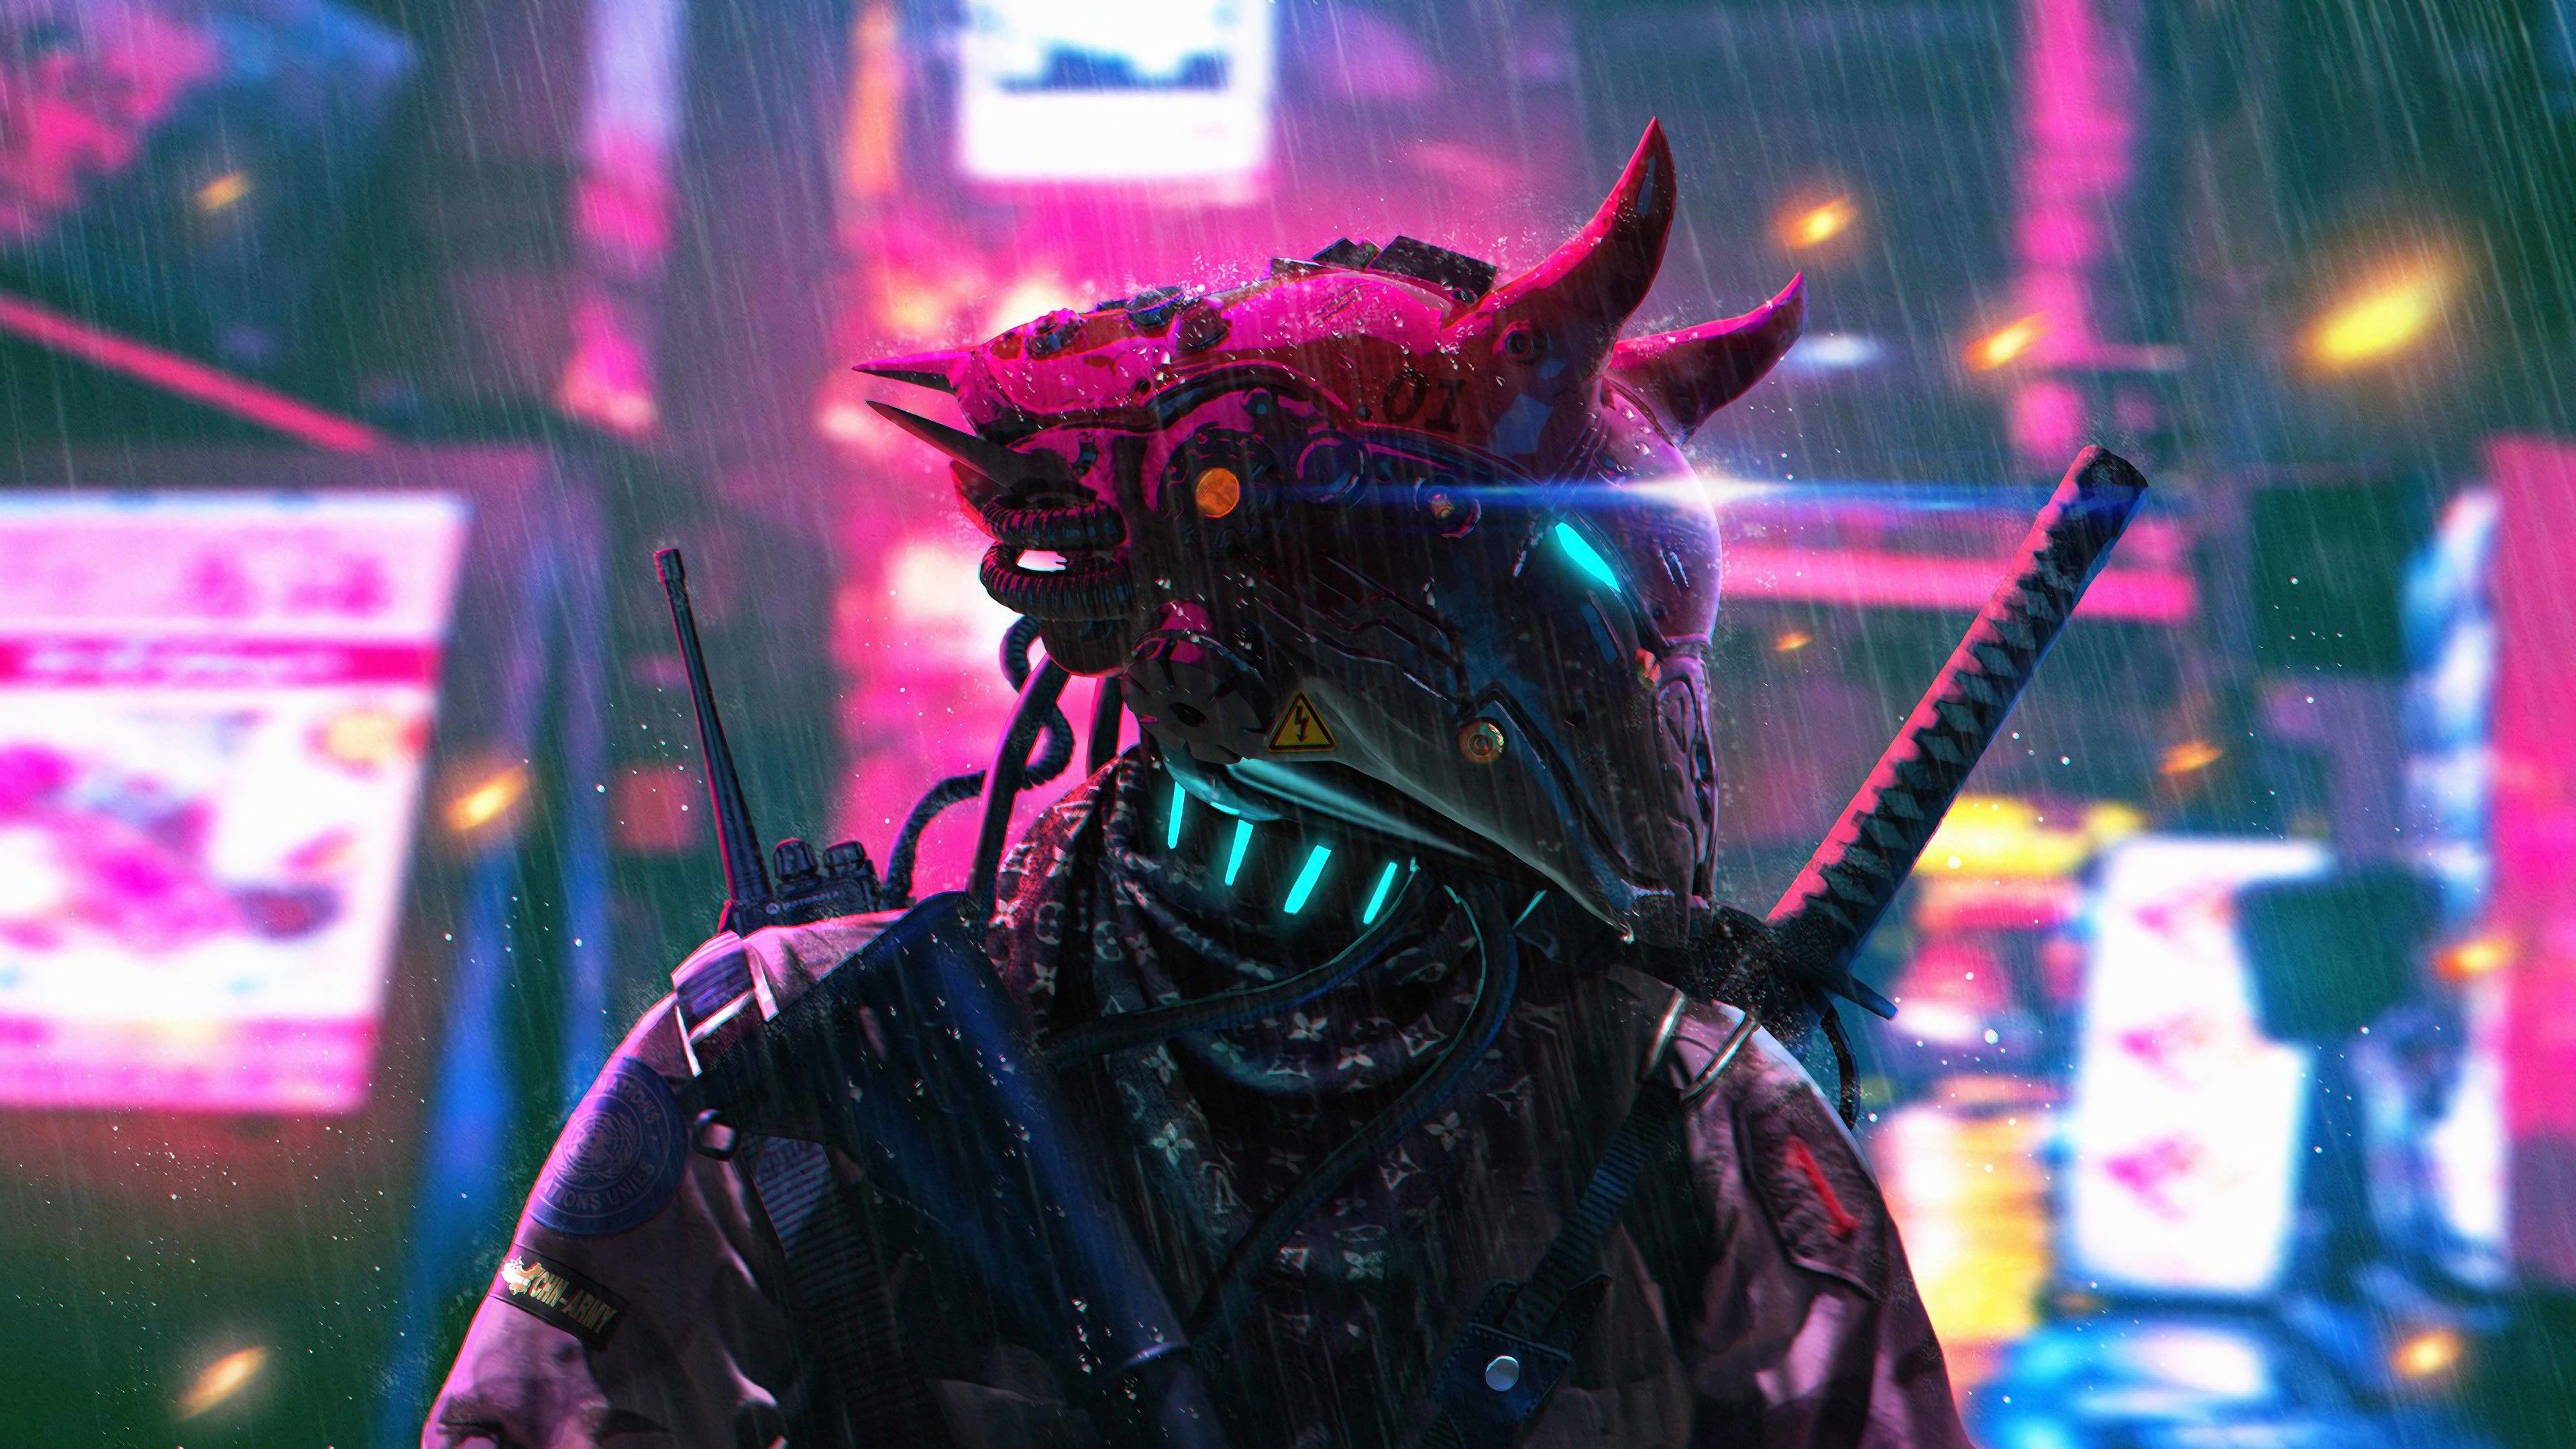 Cyberpunk wallpaper and background